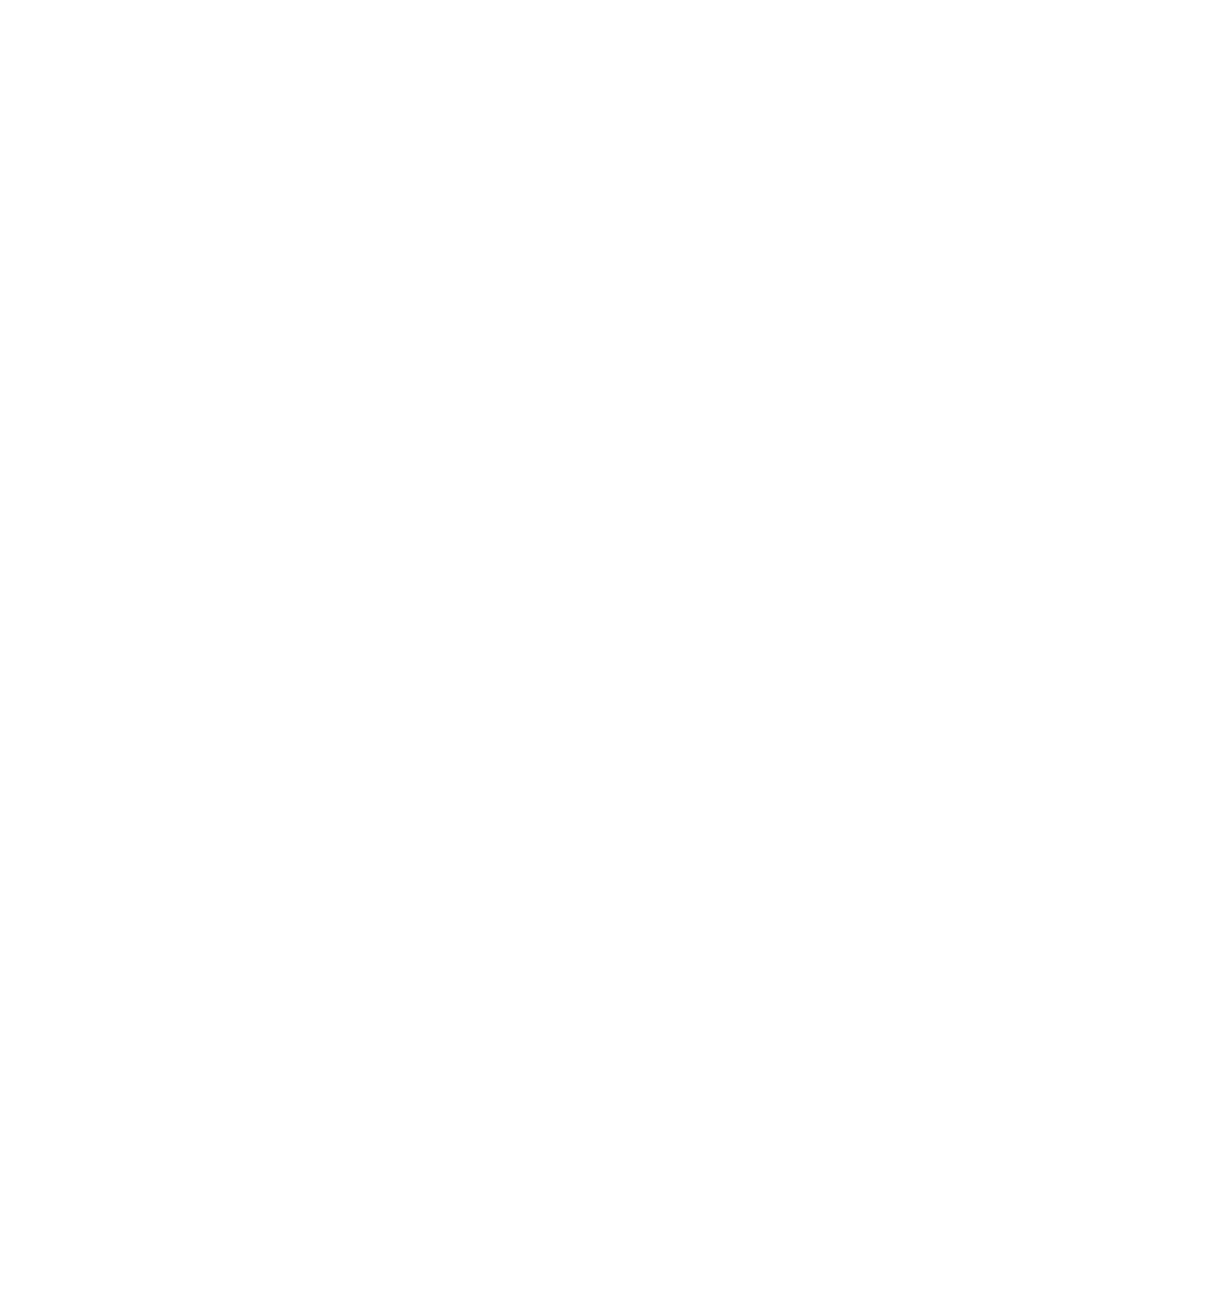 This Boy's Life logo